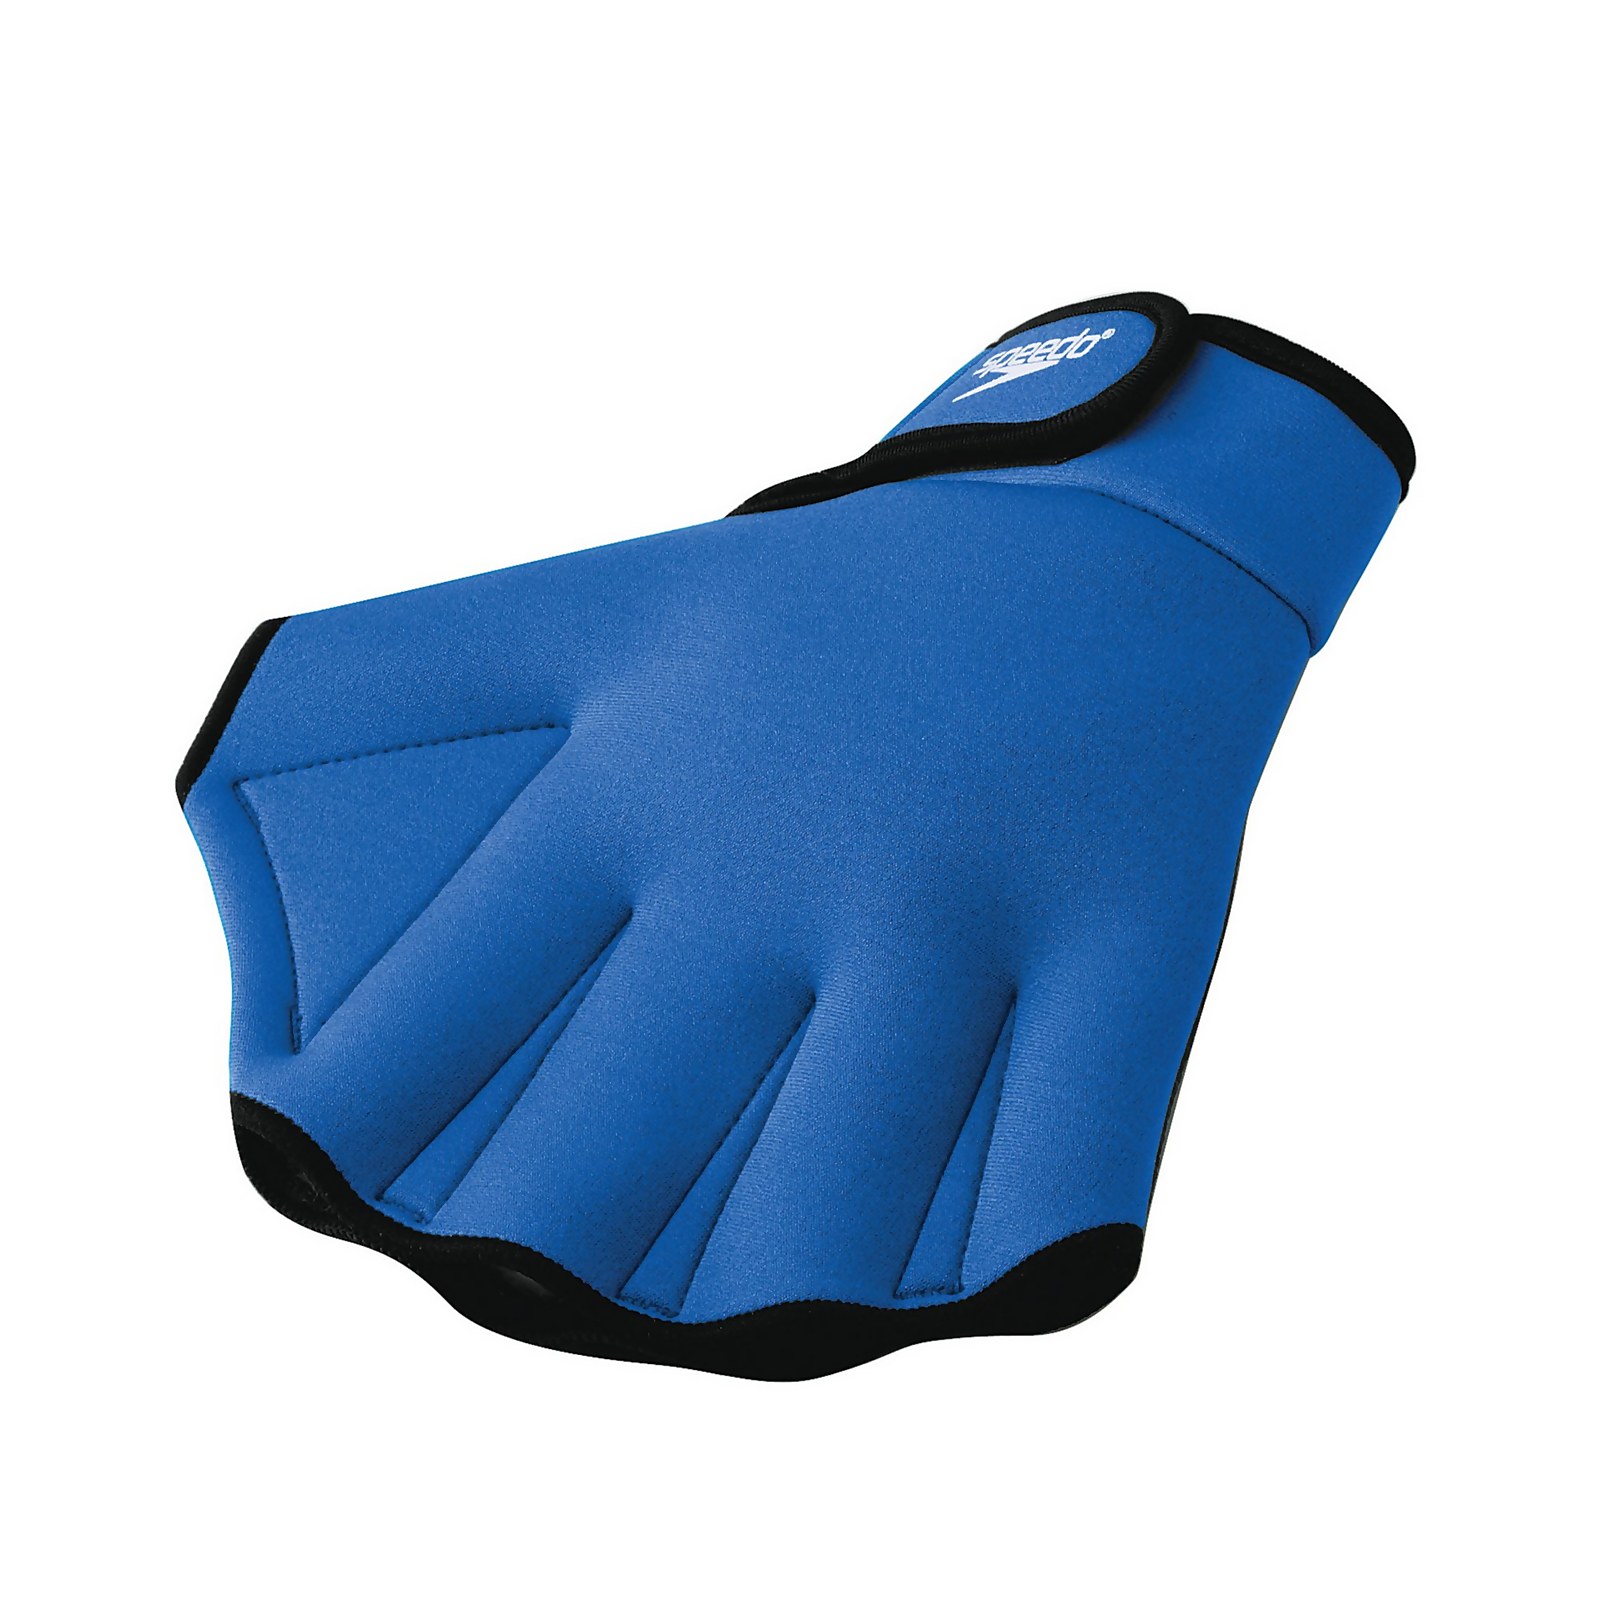 Speedo  Aquatic Fitness Gloves - L    : Blue